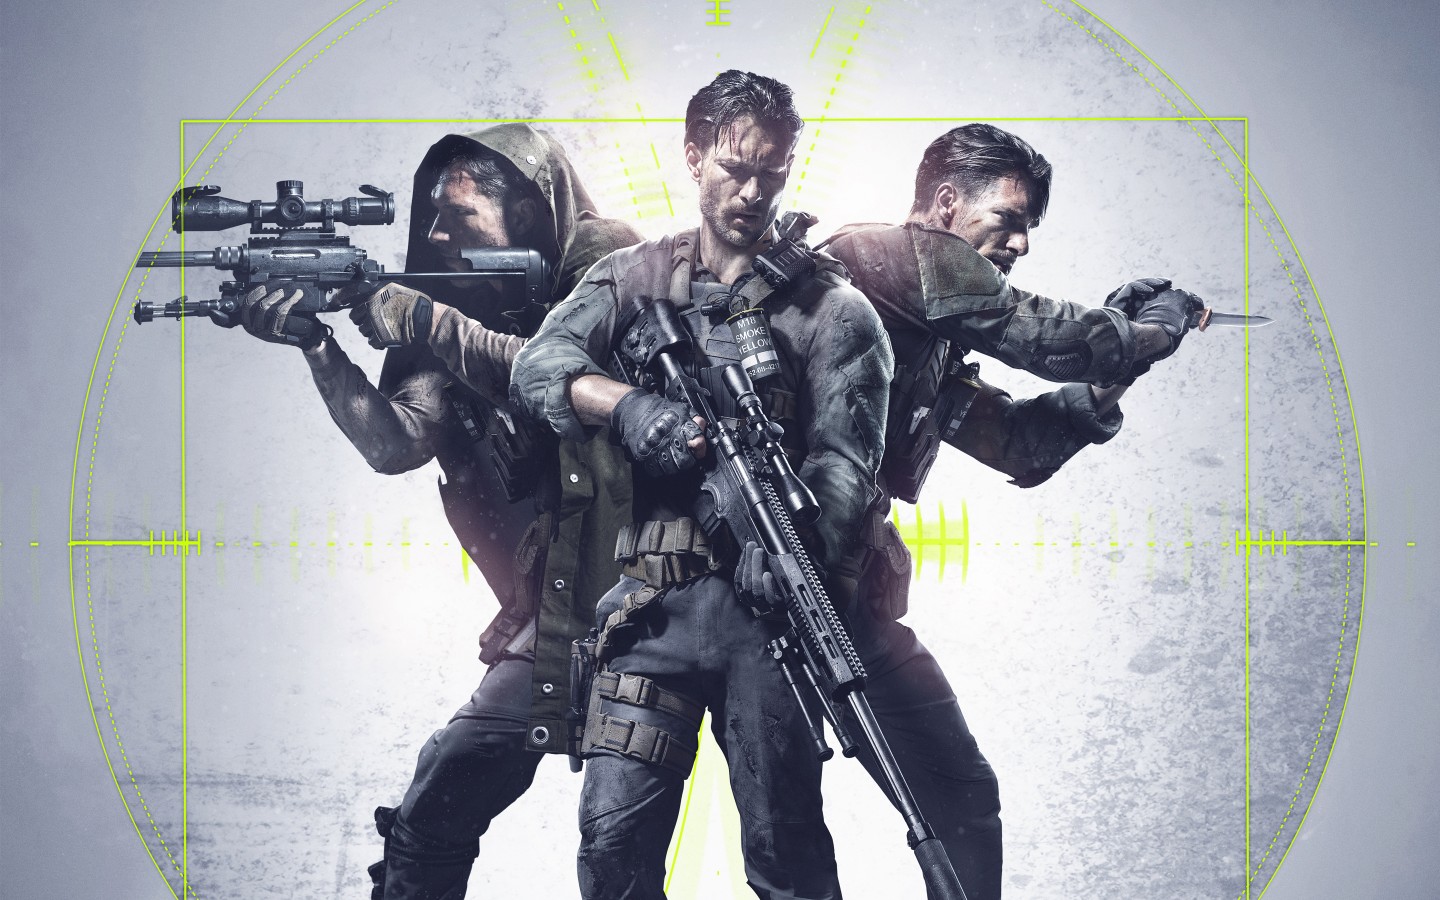 sniper ghost warrior 1 release date